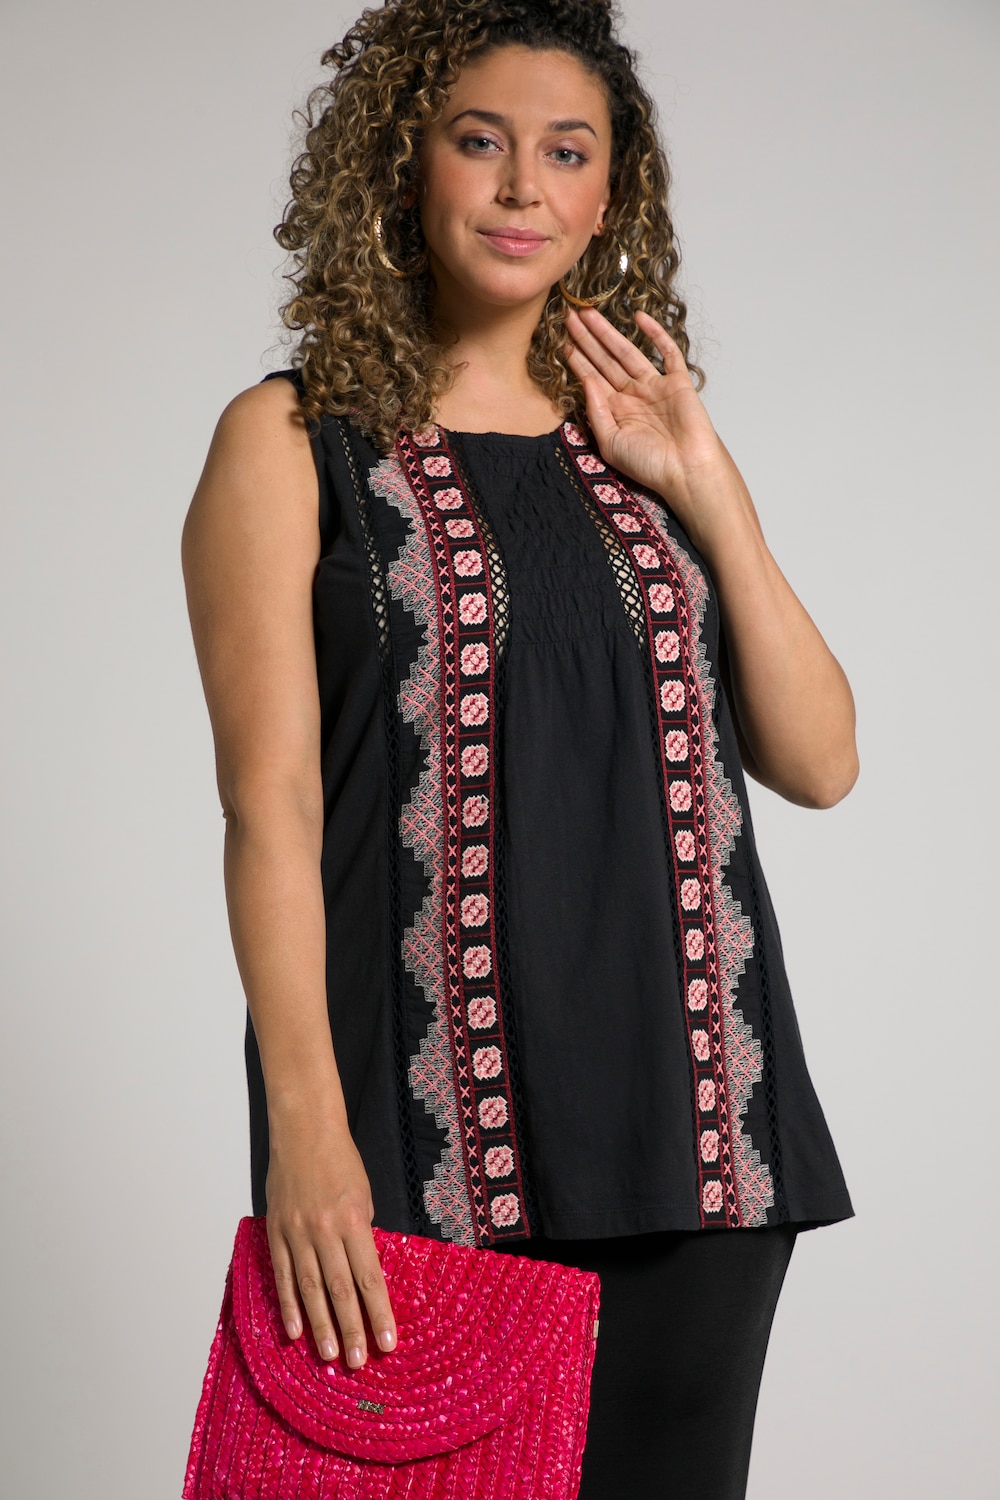 Plus Size Charming Details Embroidery Cotton Knit Tank, Woman, black, size: 16/18, cotton, Ulla Popken